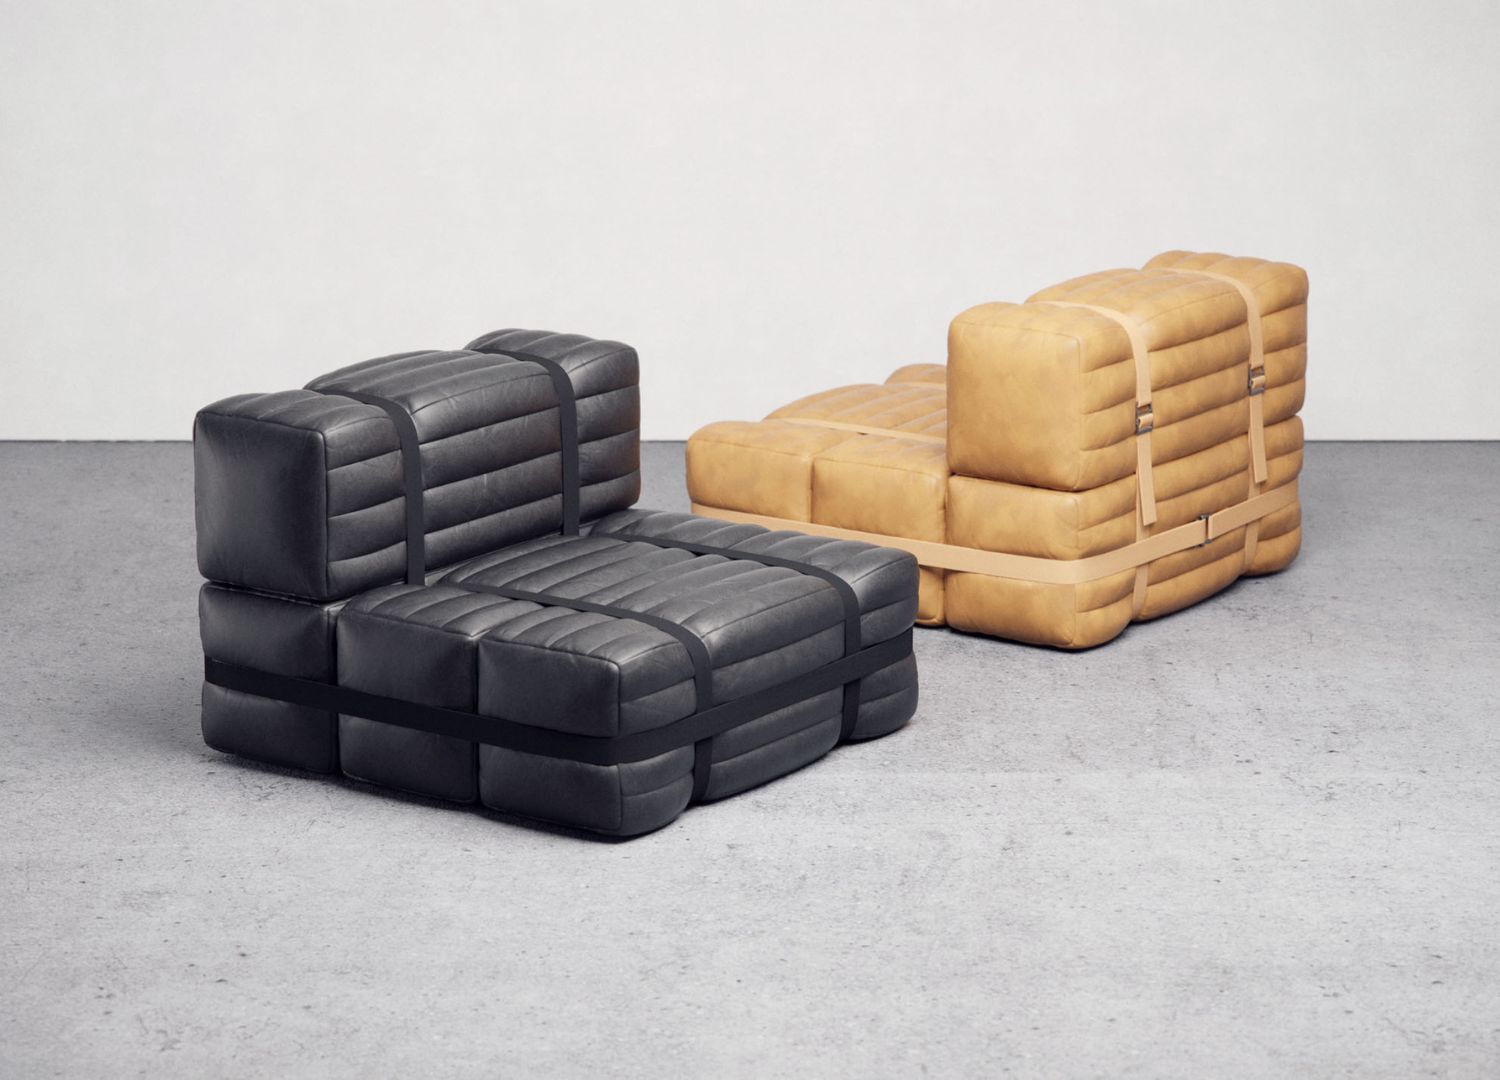 The Hay Bale Sofa System by Nicholas Baker - Unique furniture designs _ ratchet straps